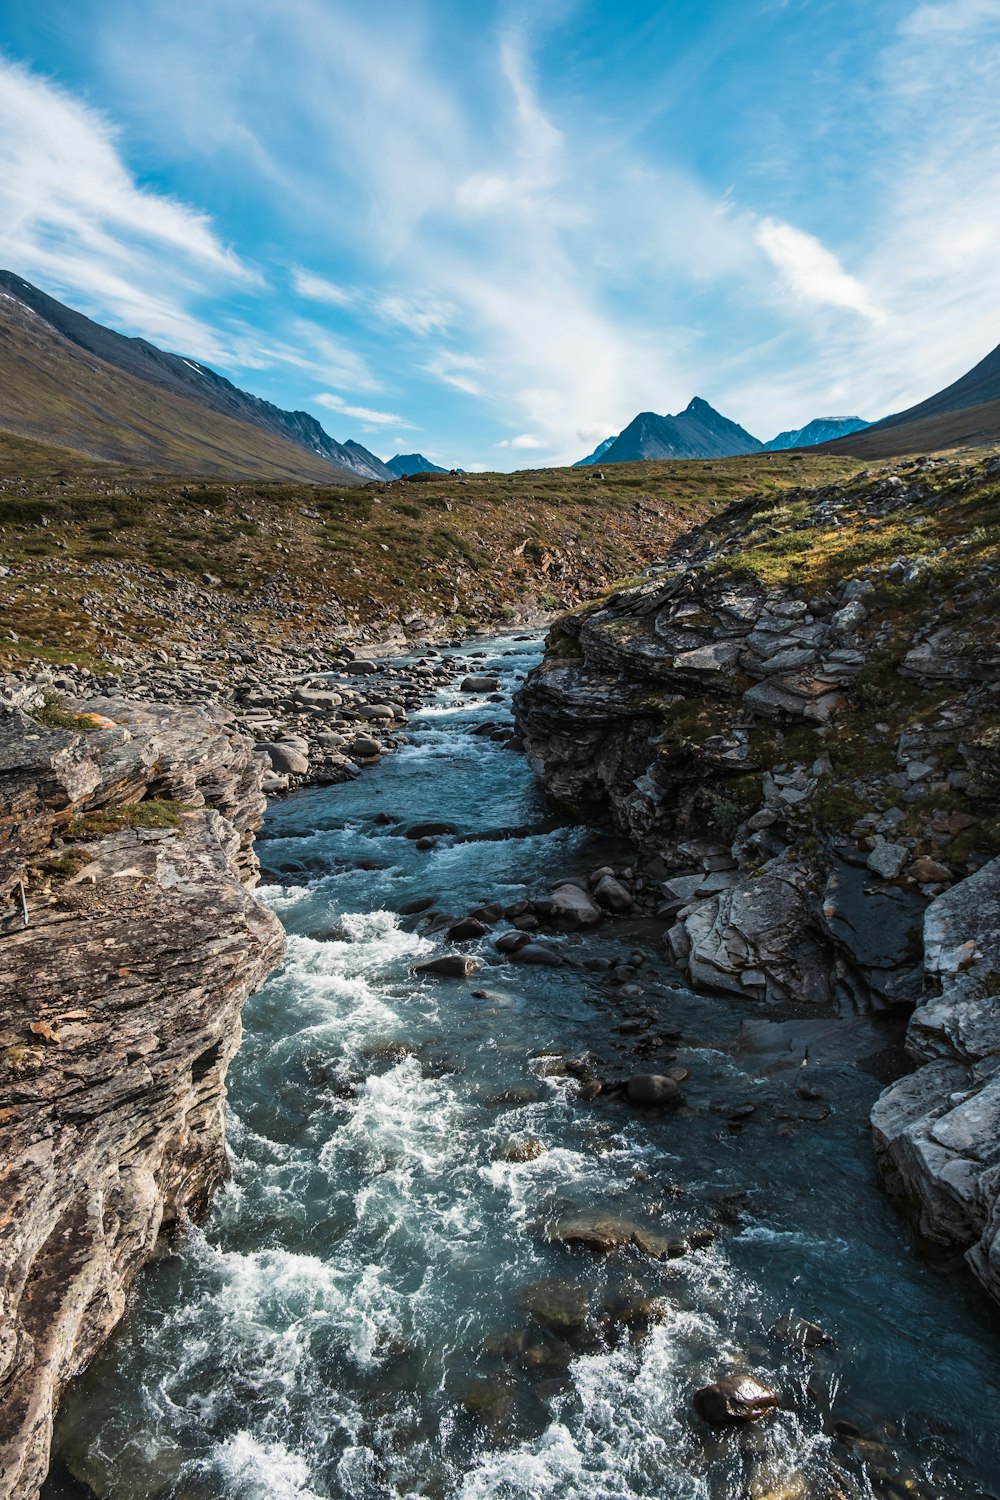 a river running through a rocky valley under a blue sky